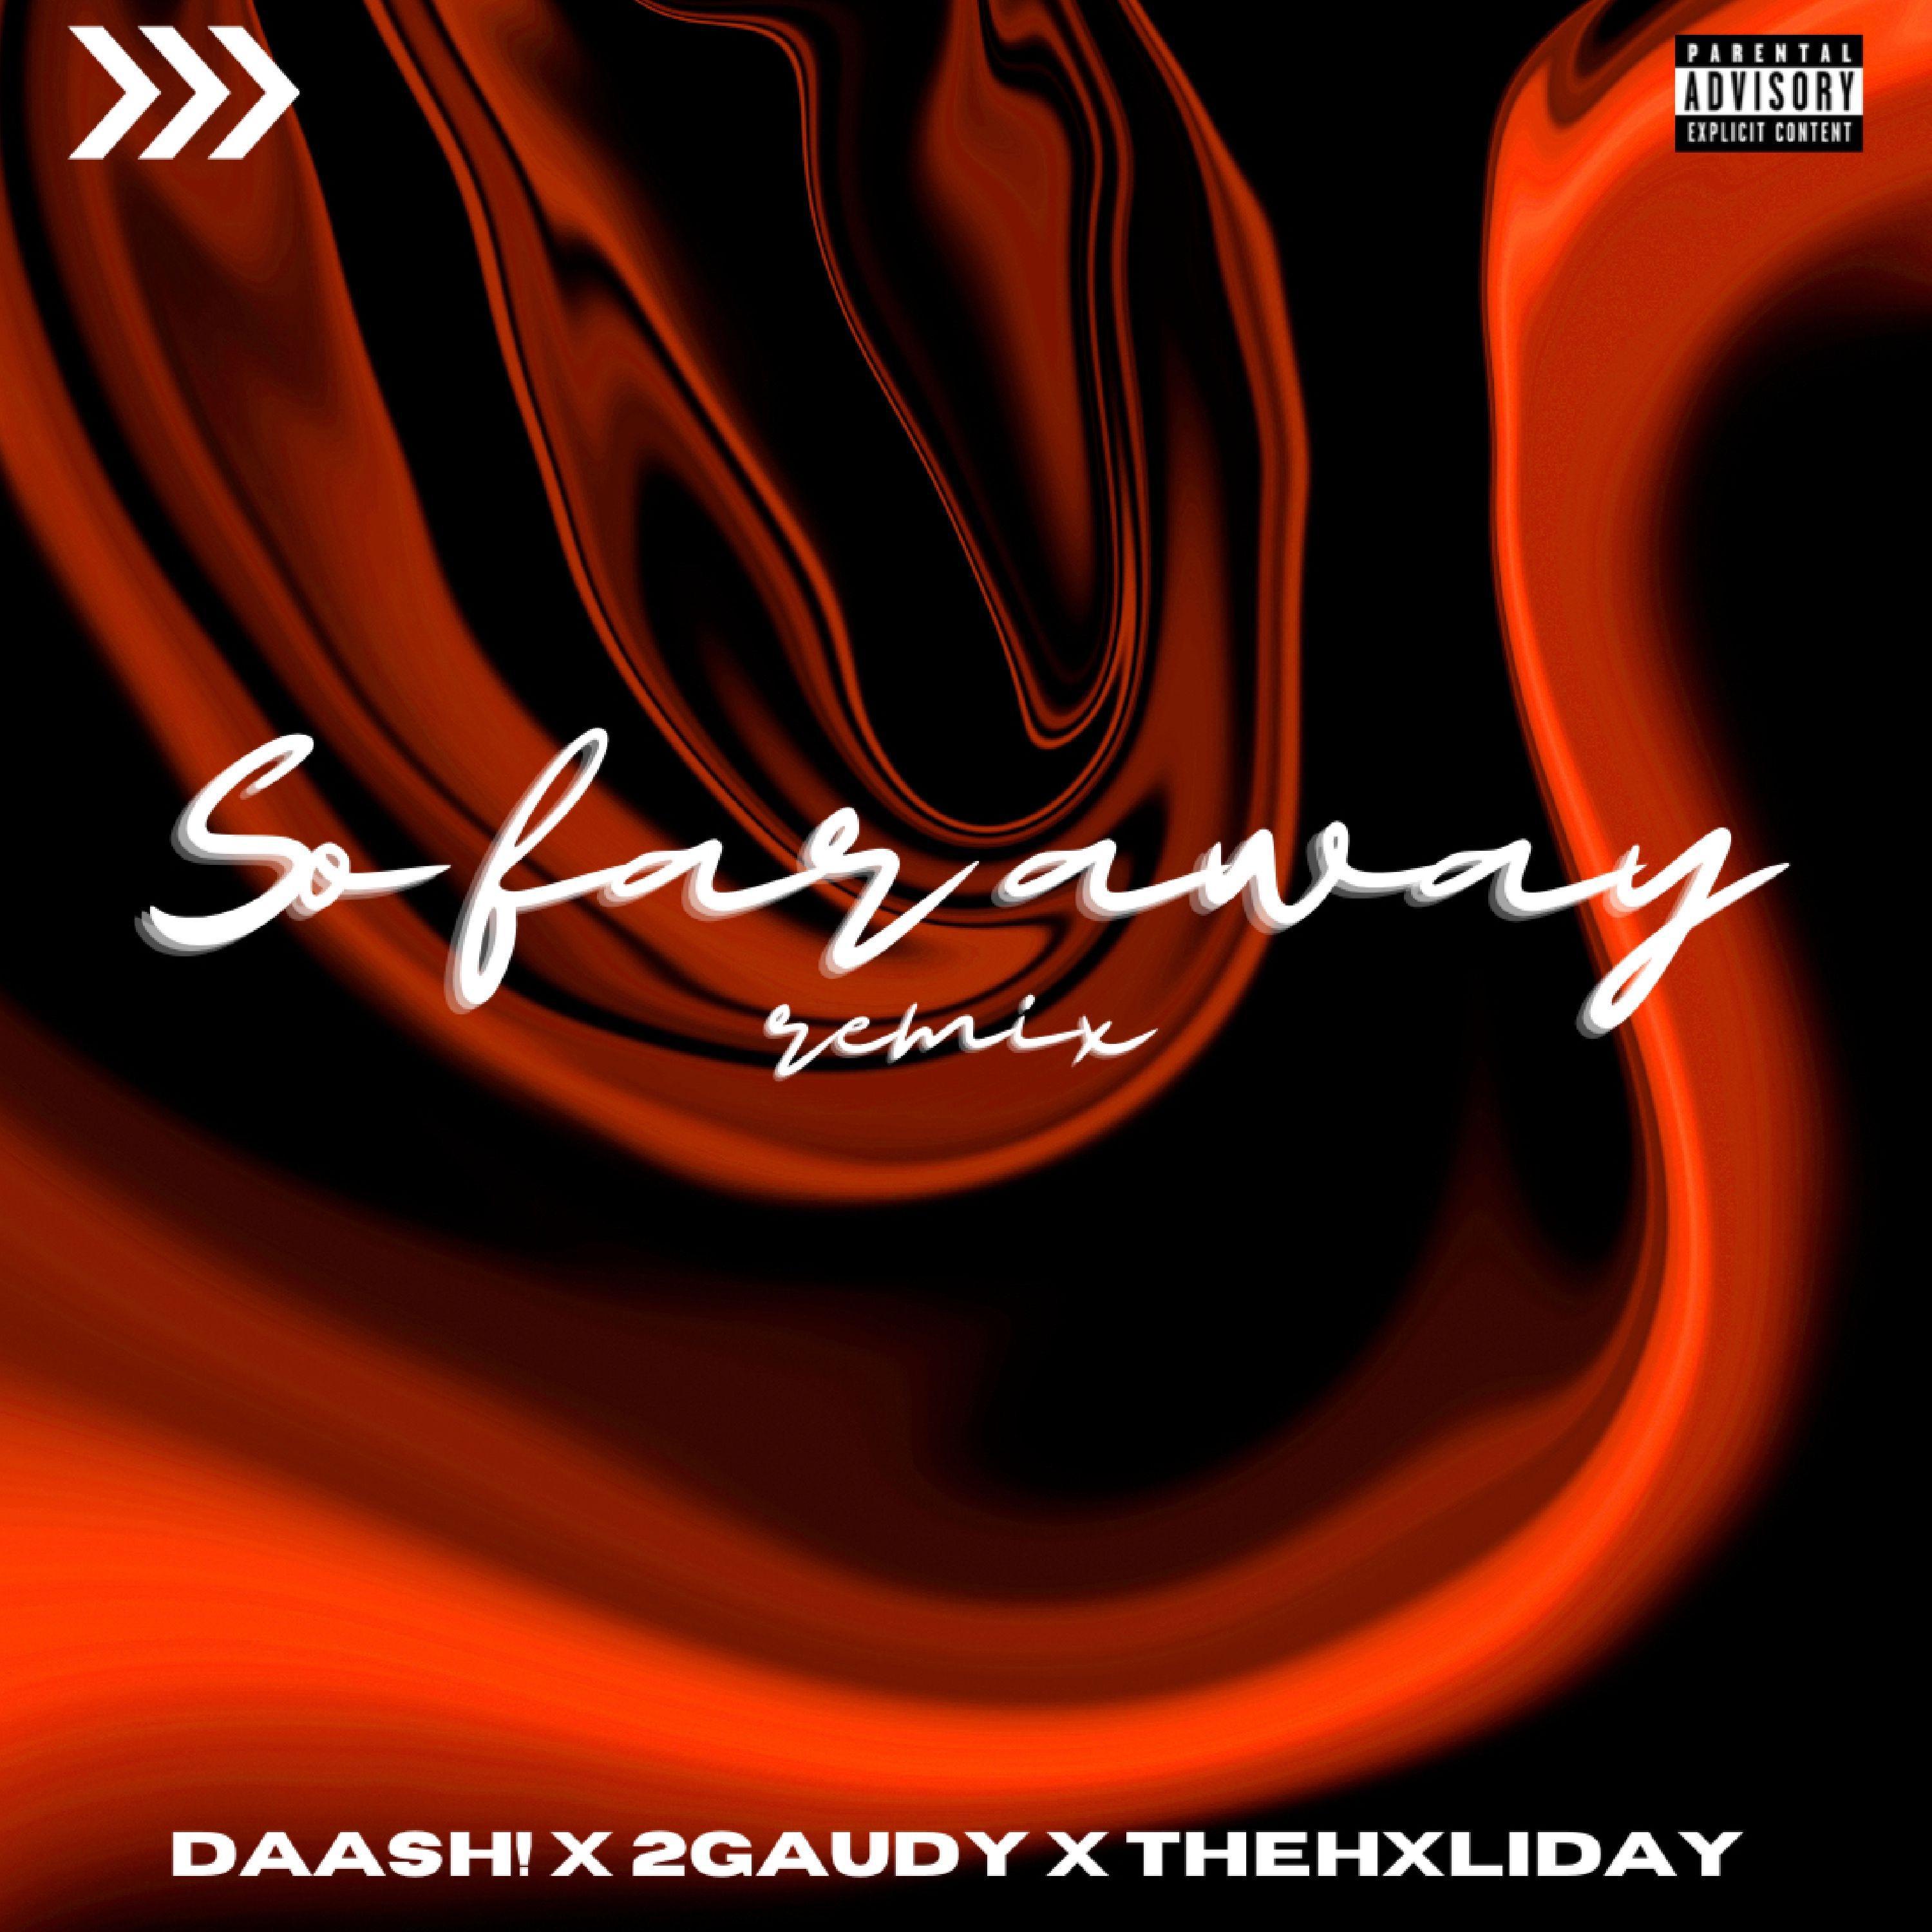 daash! - So Far Away (feat. TheHxliday) (Remix)